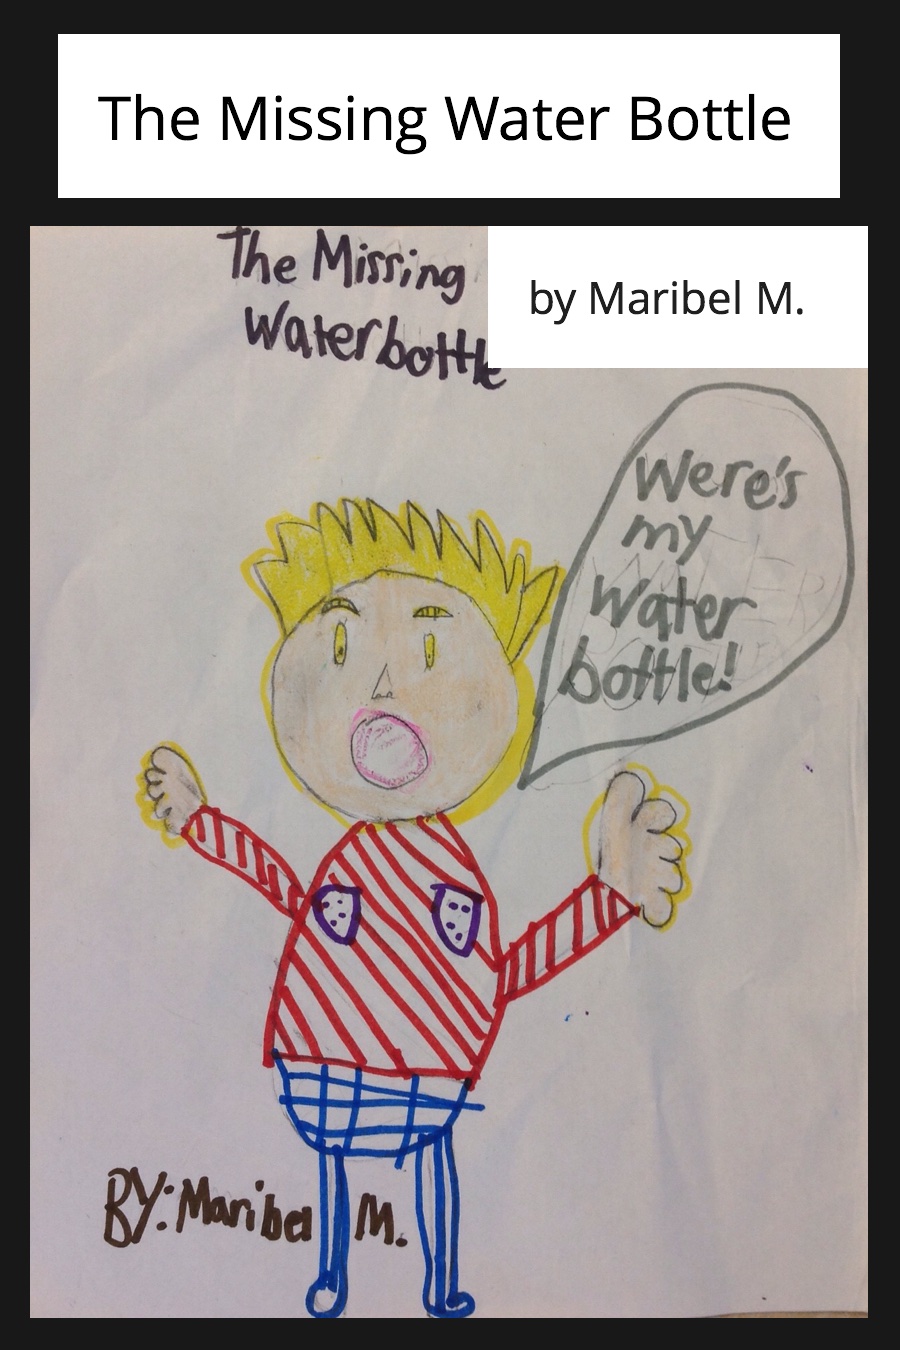 The Missing Waterbottle by Maribel M